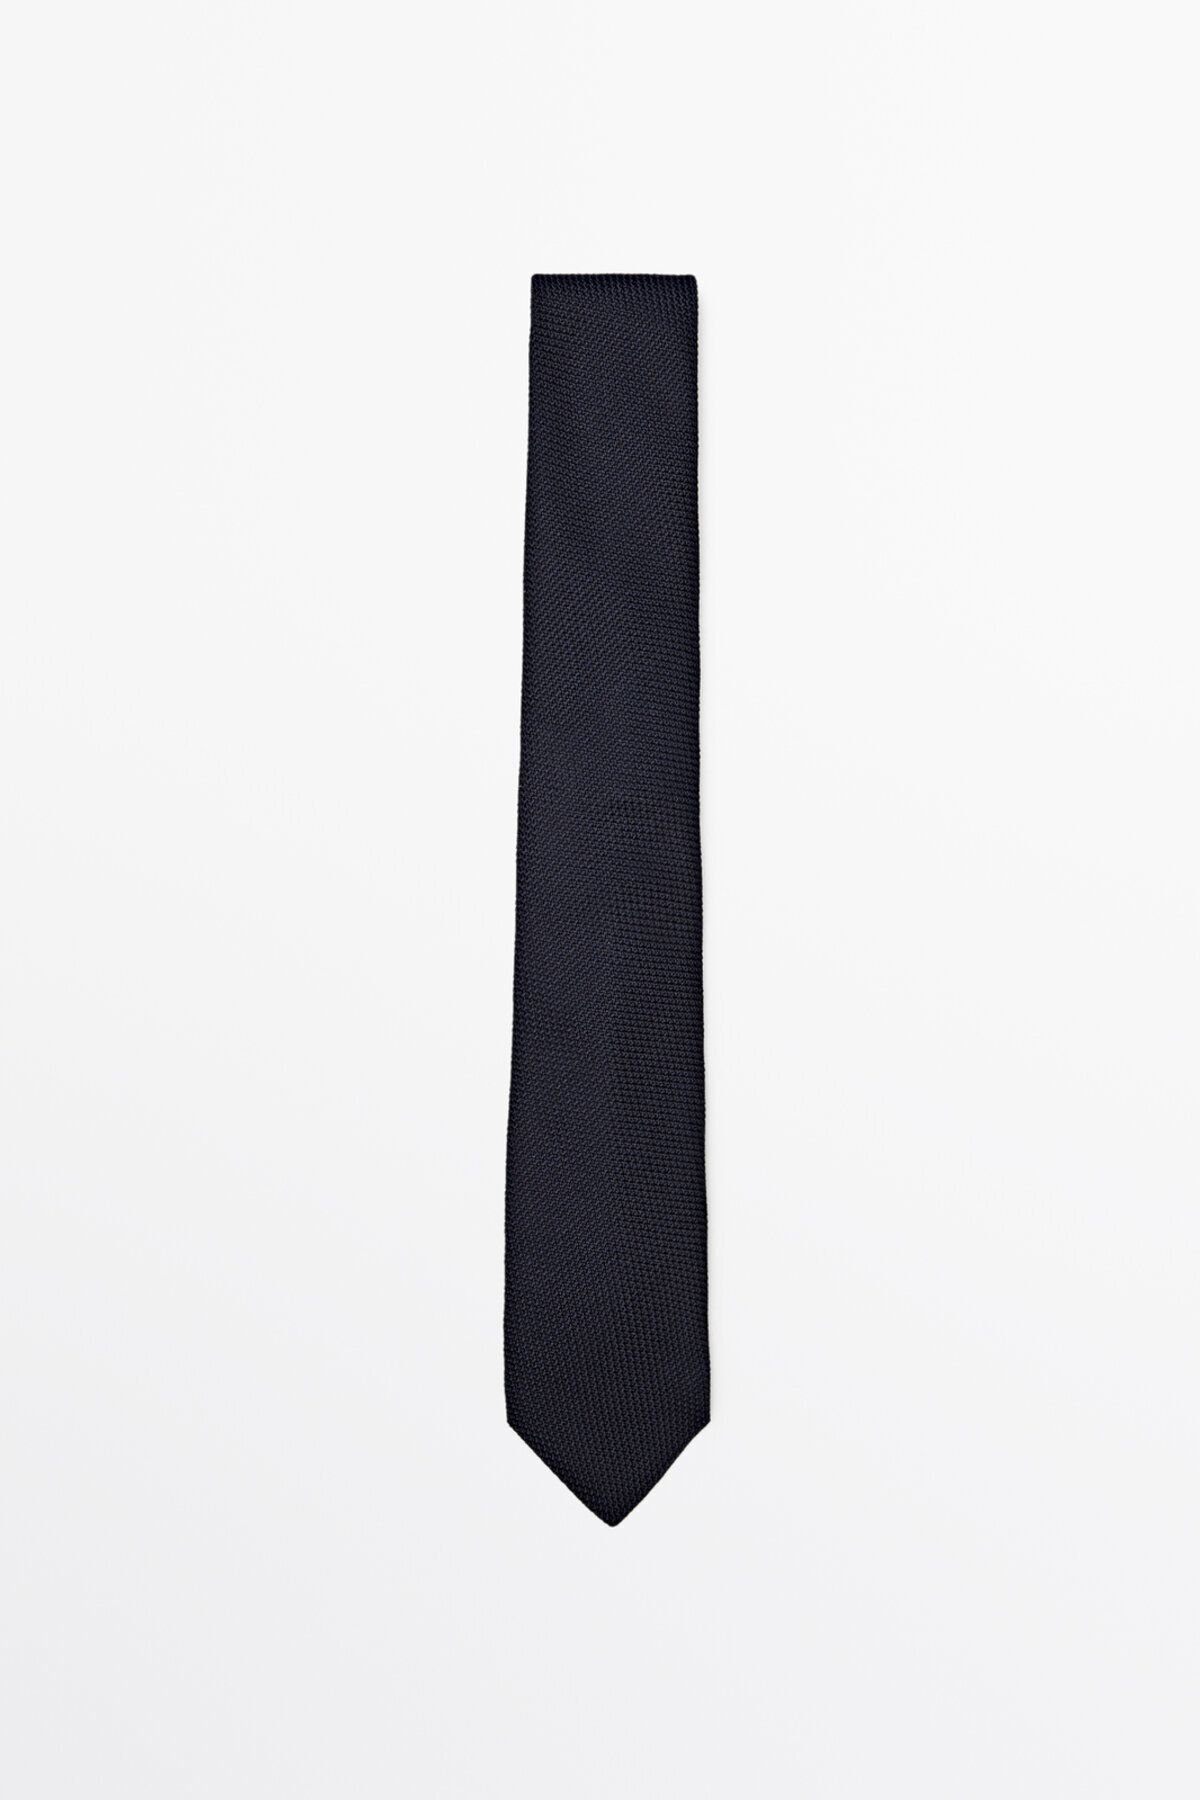 Massimo Dutti %100 garza ipeği mikro dokulu kravat